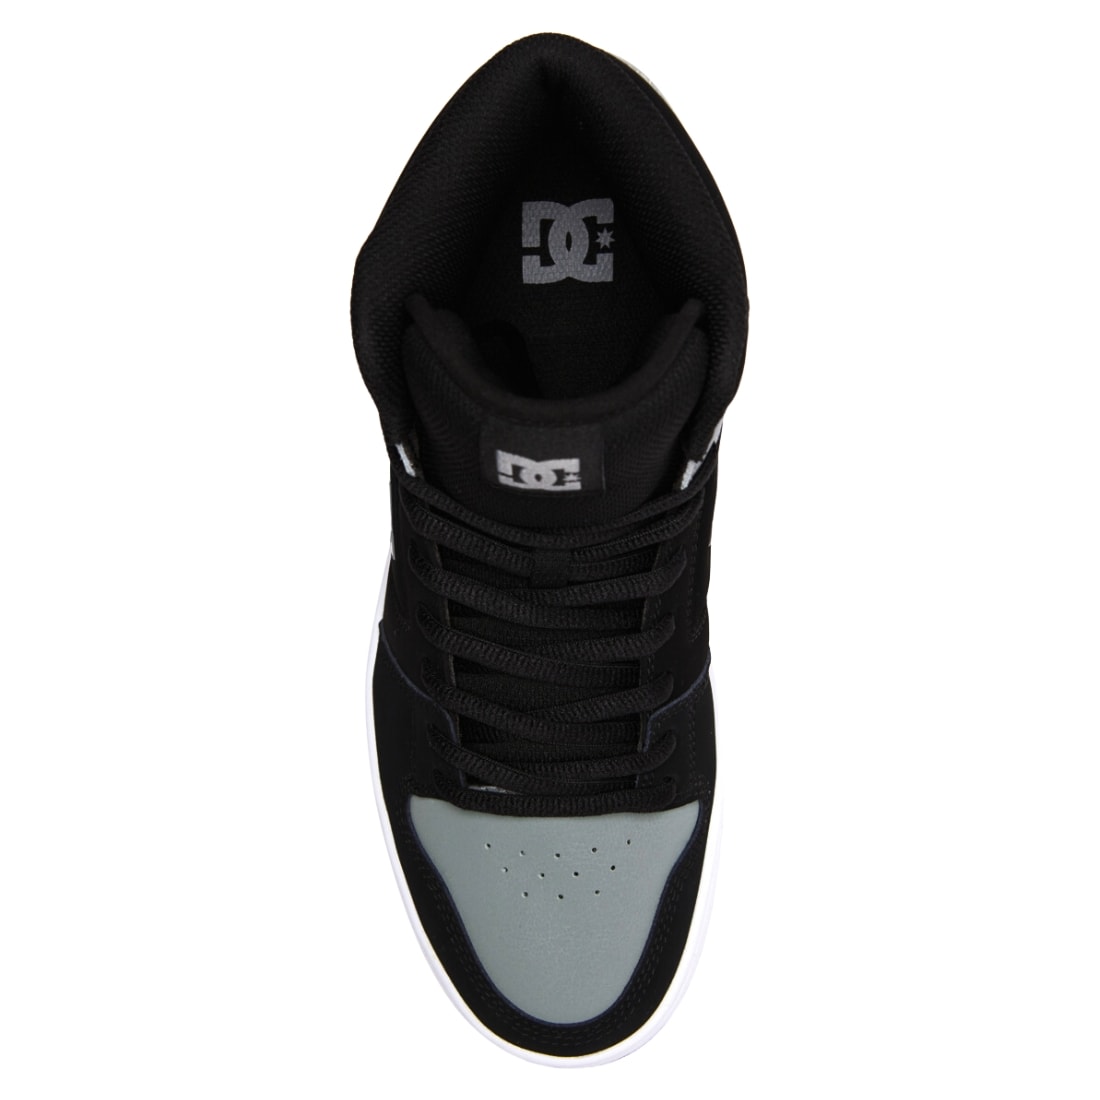 Dc Manteca 4 Hi-Top Shoes - Black/Grey - Mens Skate Shoes by DC